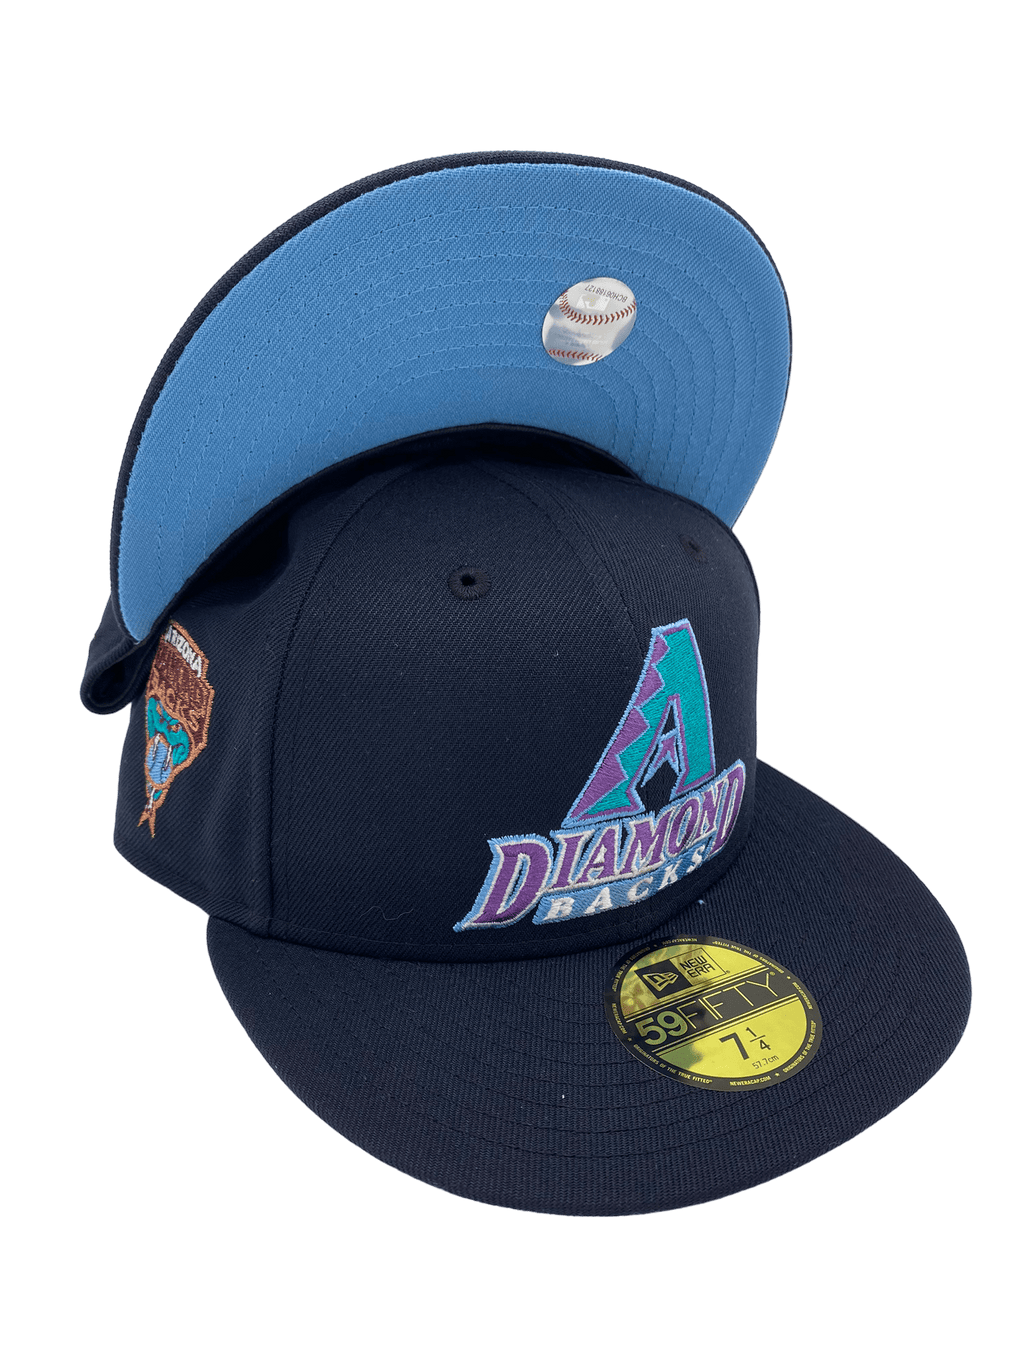 New Era Cream Arizona Cardinals Retro 59FIFTY Fitted Hat